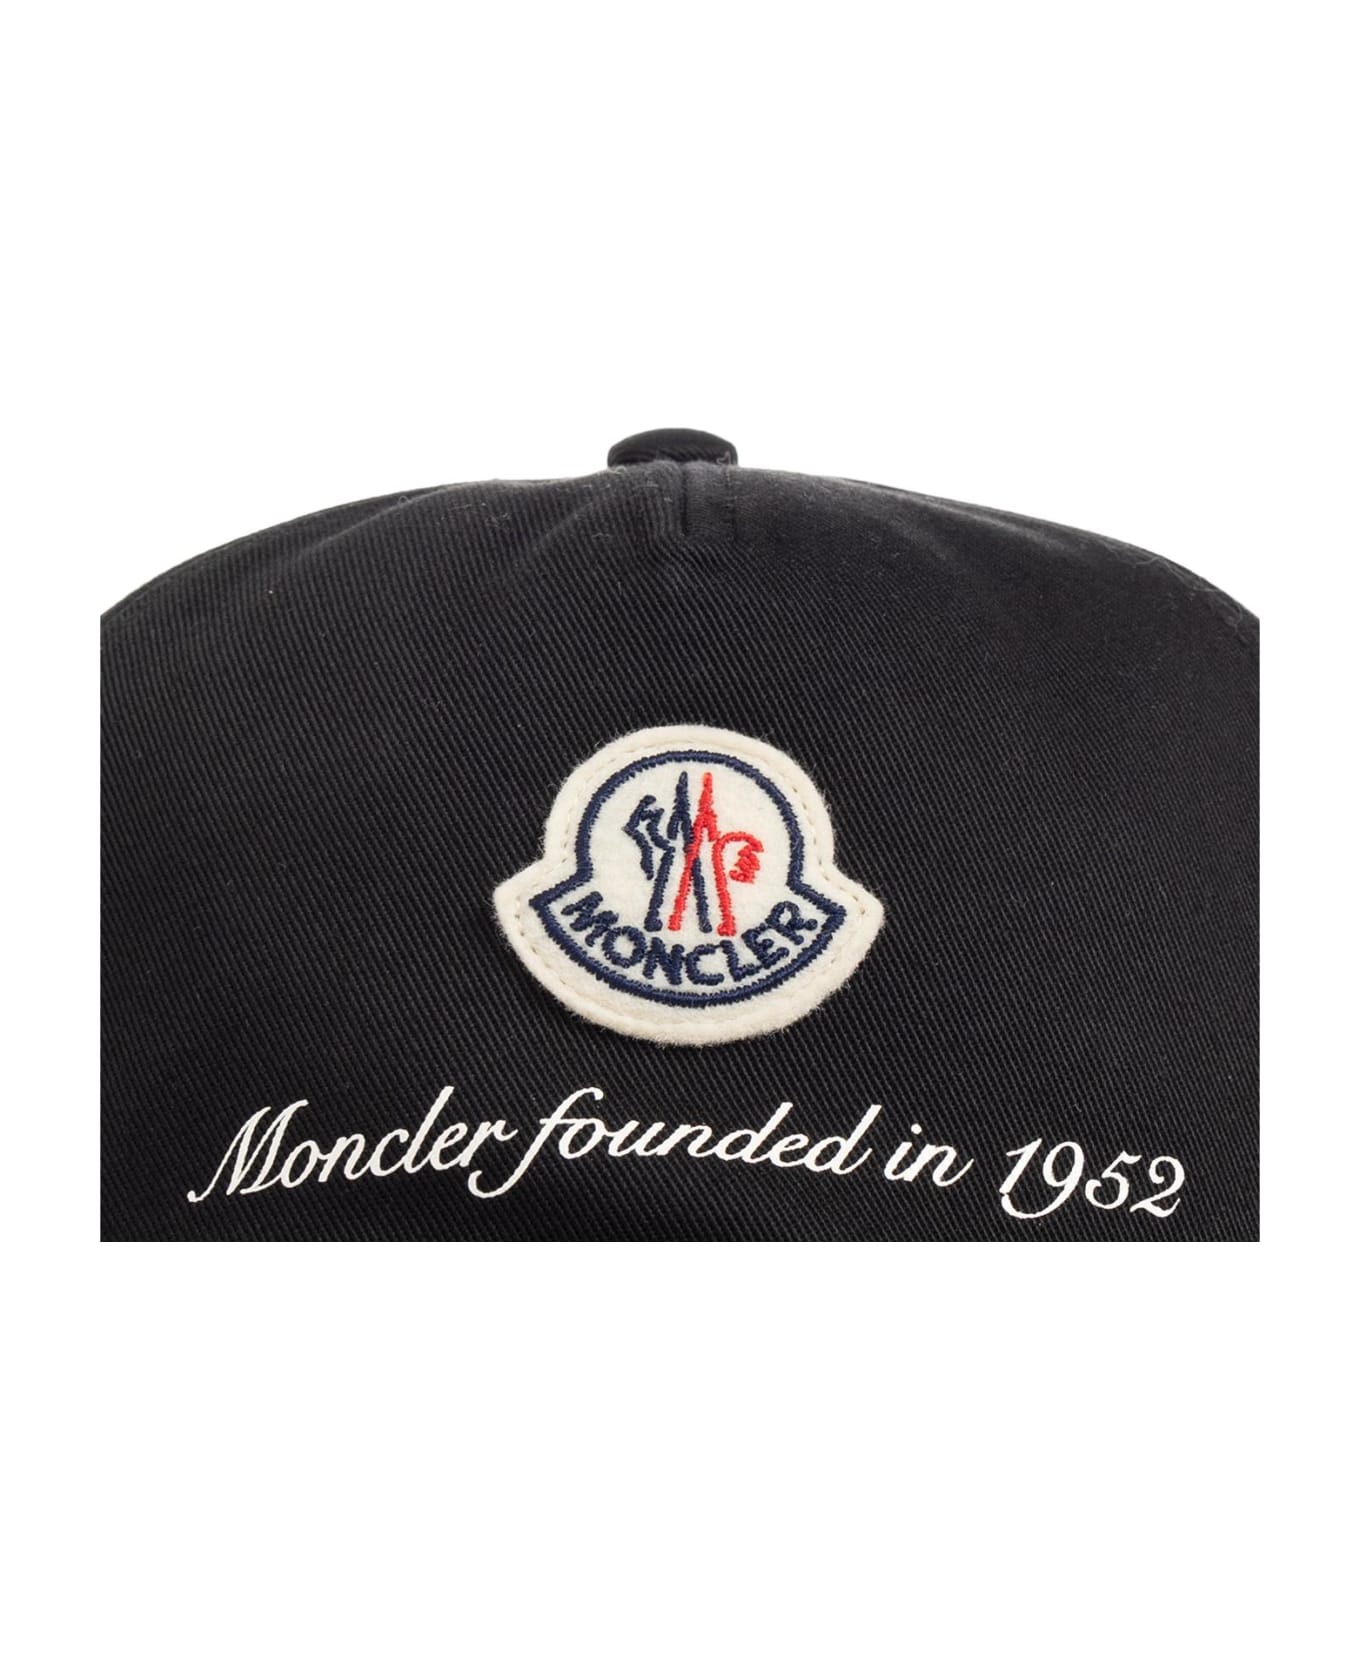 Moncler Baseball Cap With Logo - Black 帽子